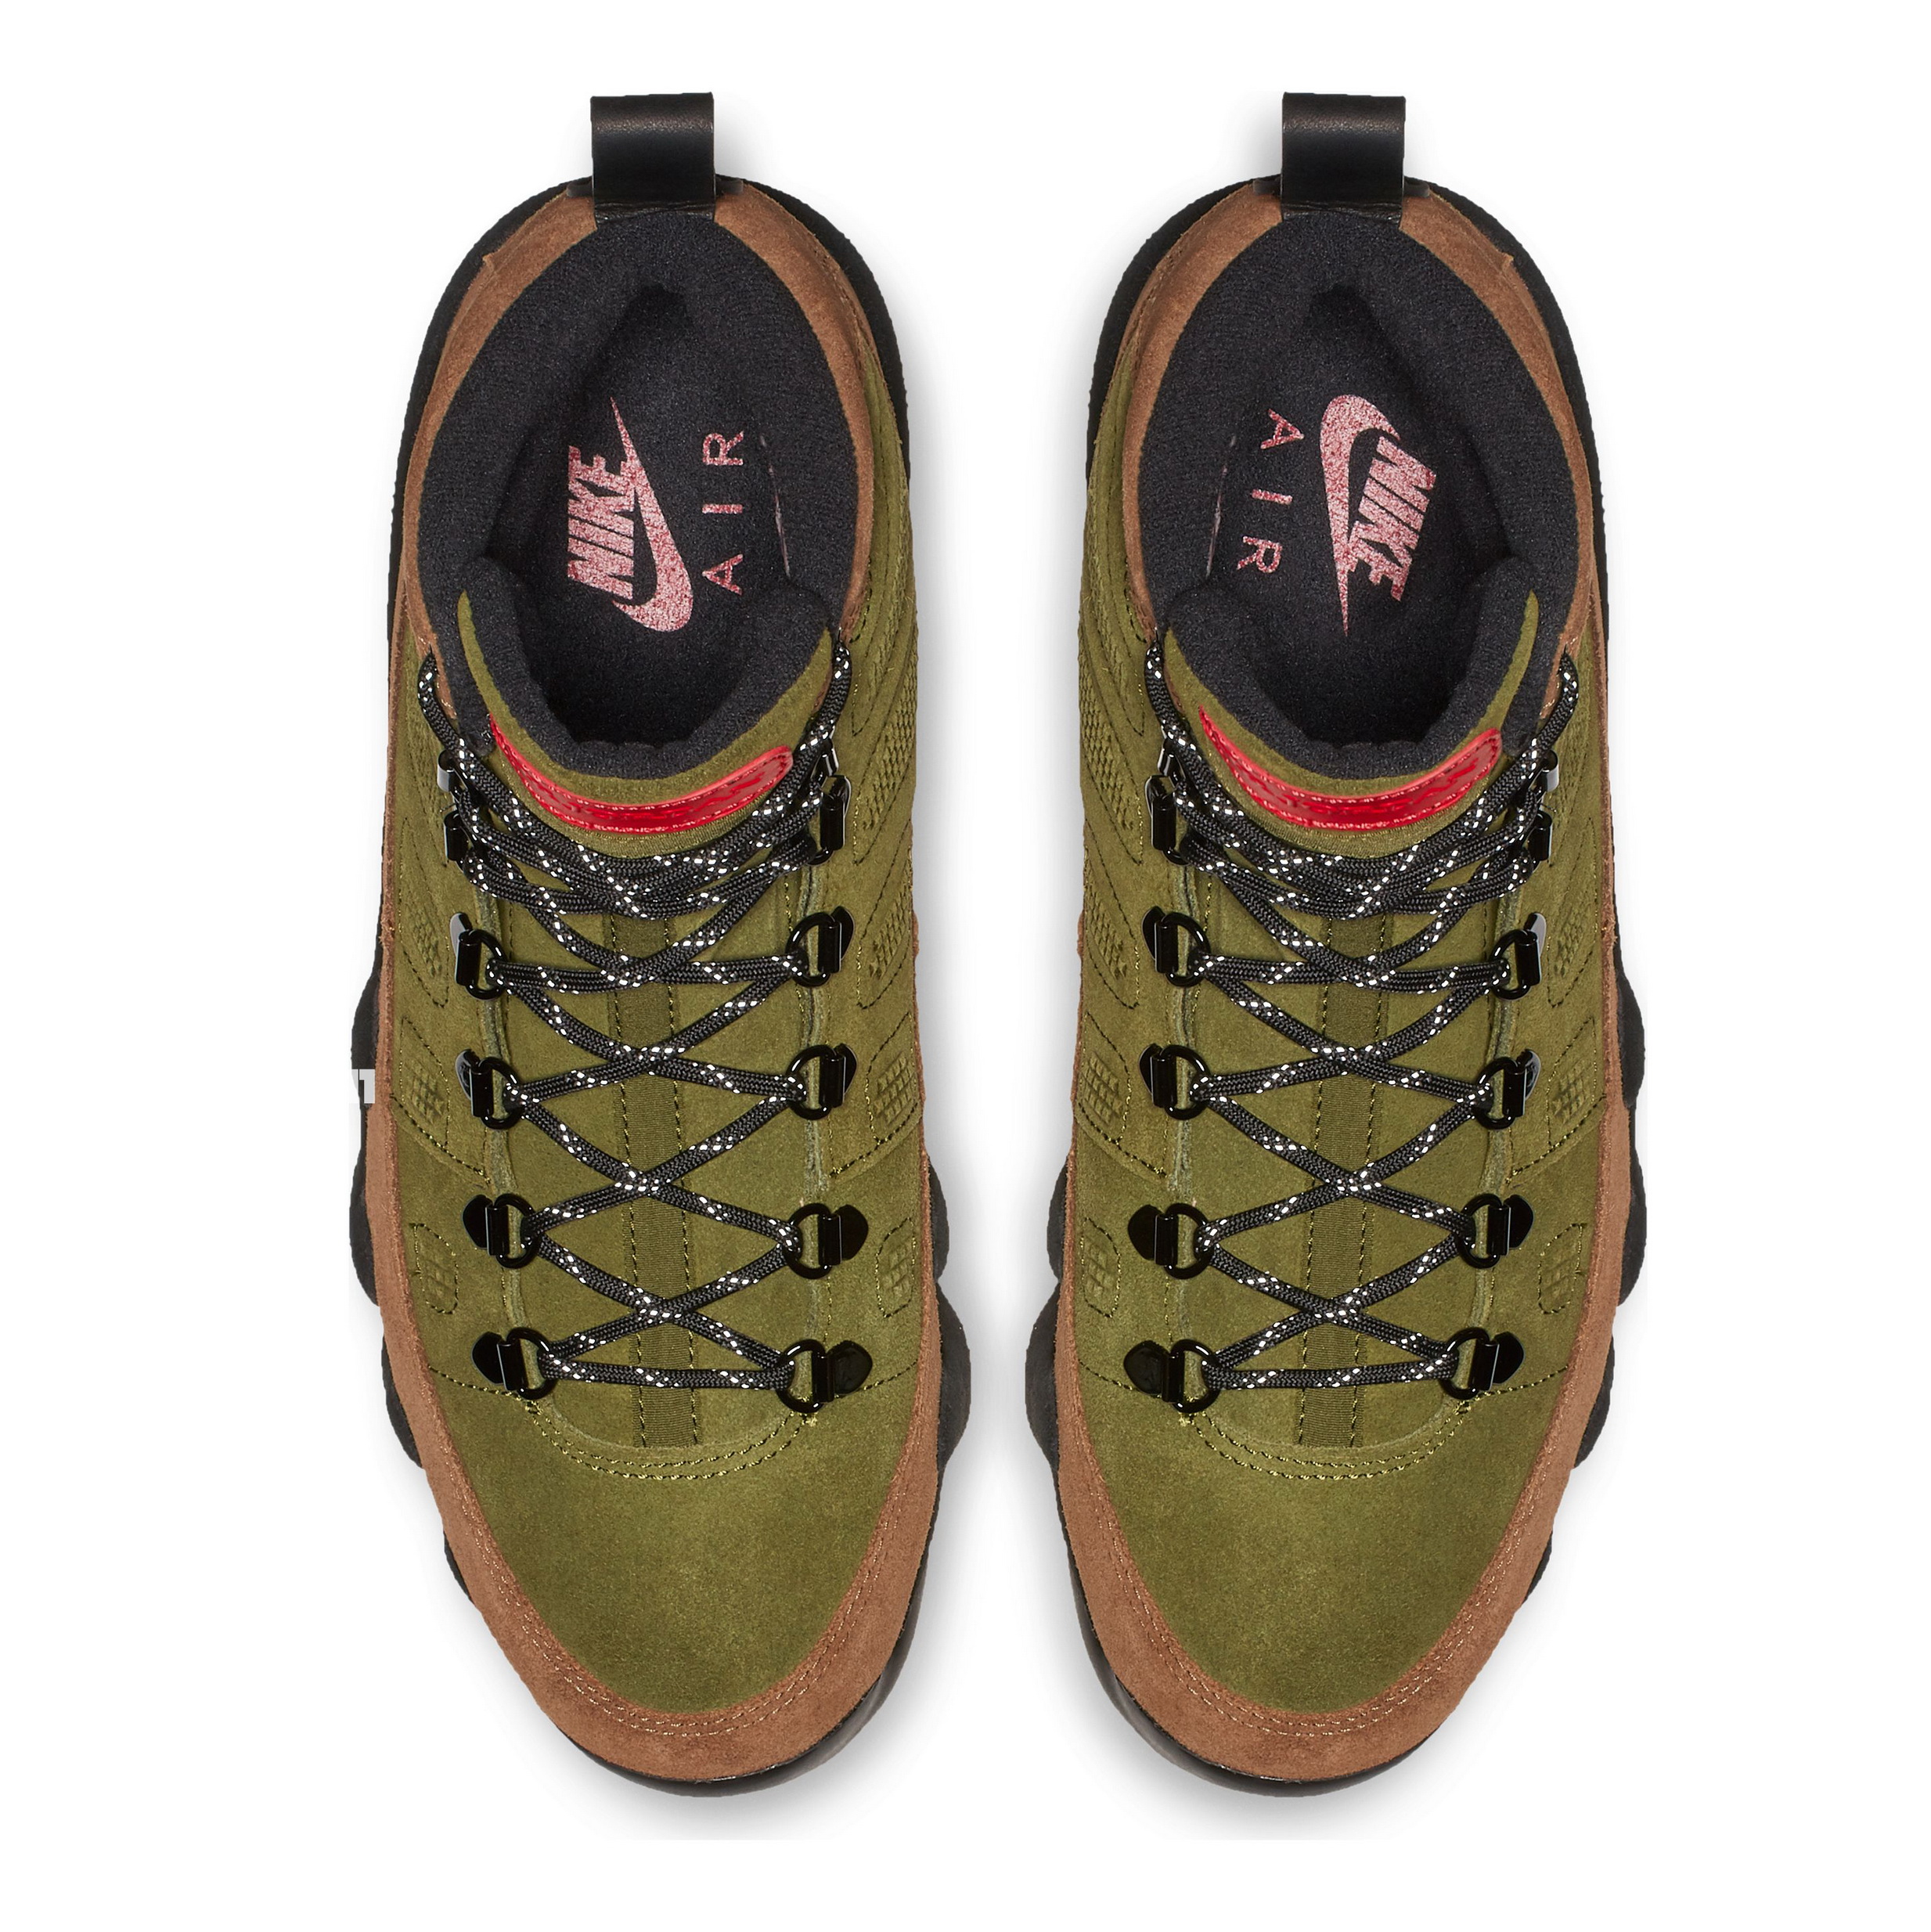 Air jordan 9 boot NRG olive release date 1